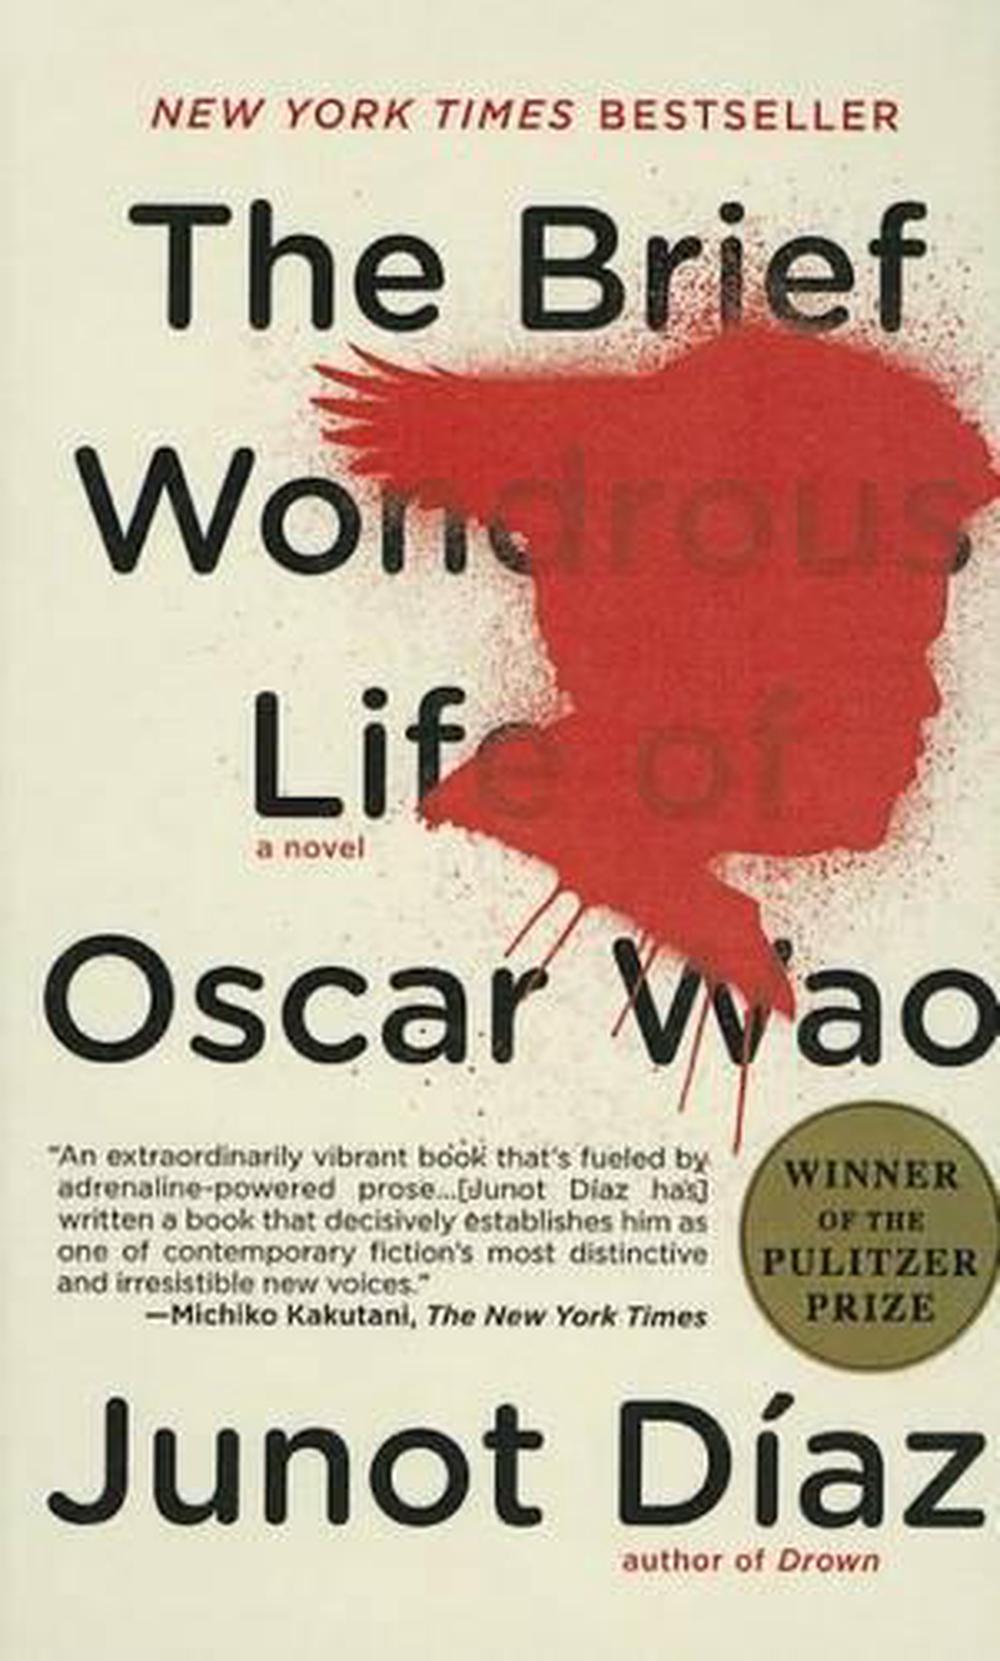 the brief wondrous life of oscar wao thesis